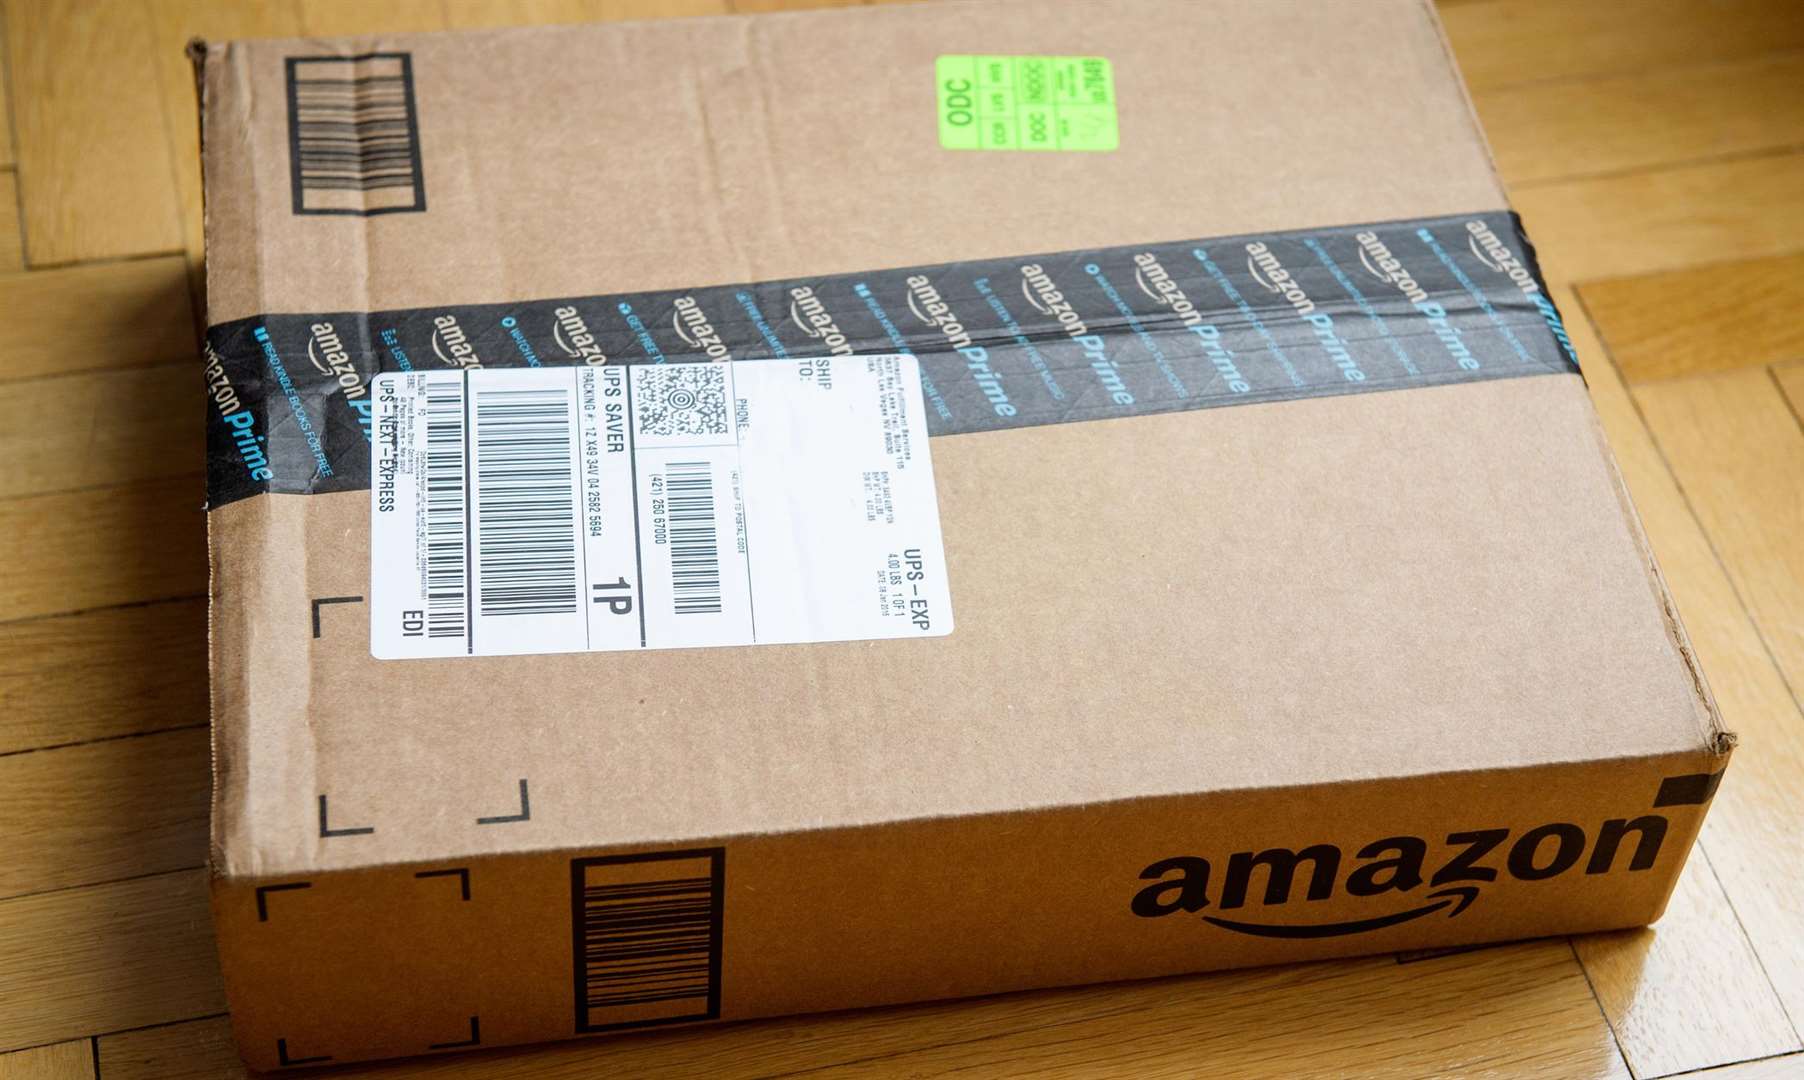 Amazon delivers straight to your door